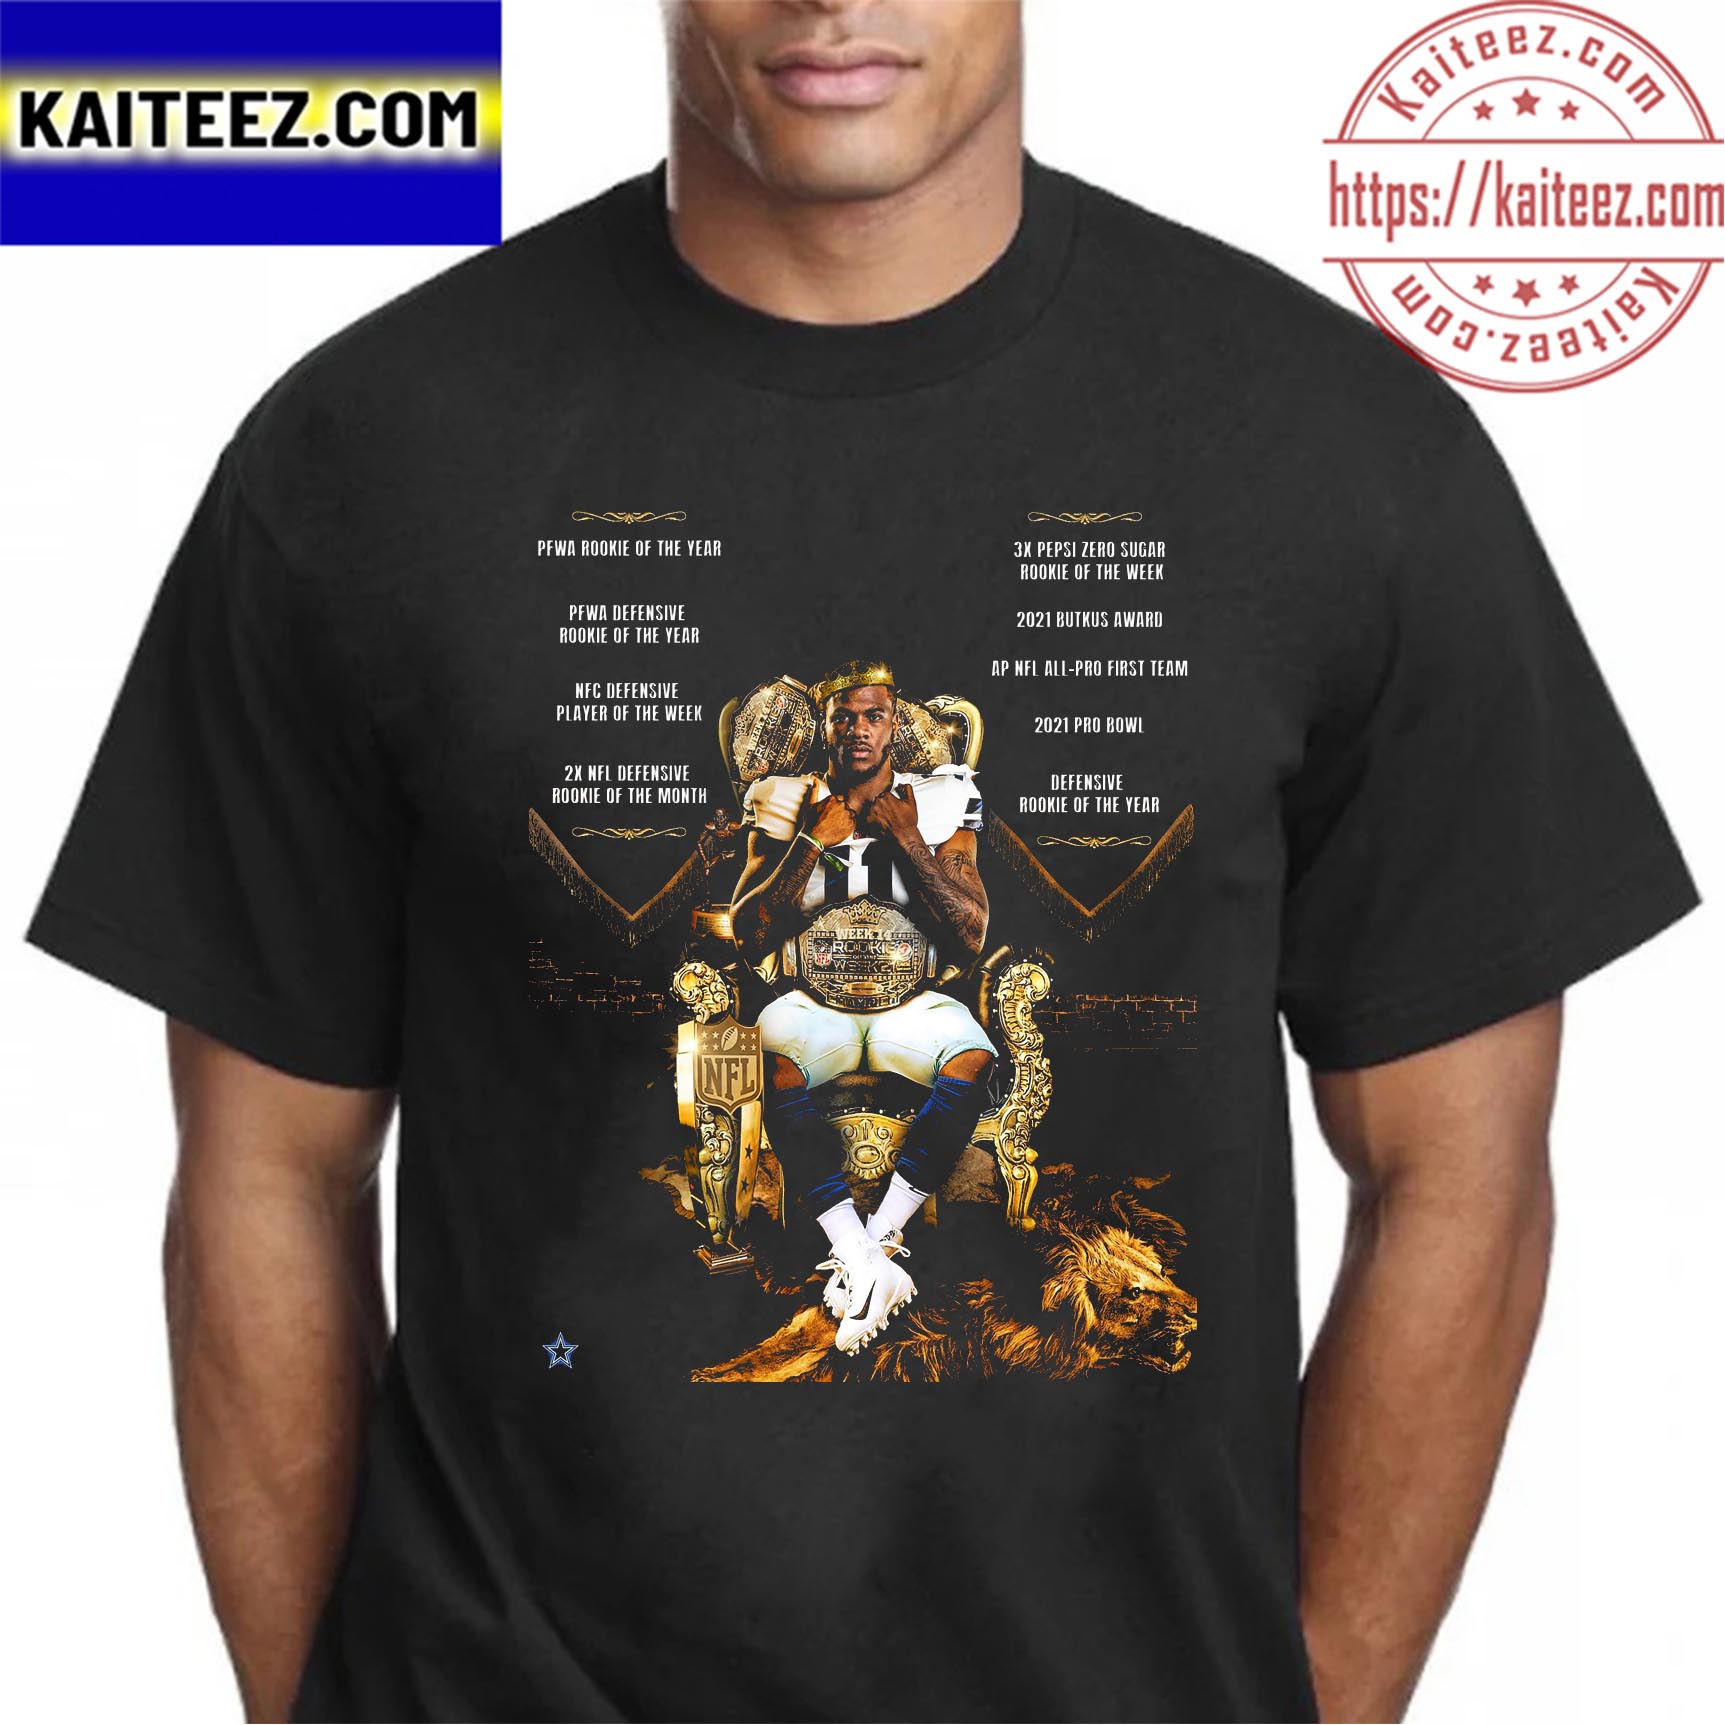 Micah Parsons Shirt, Dallas Football Men's Cotton T-Shirt